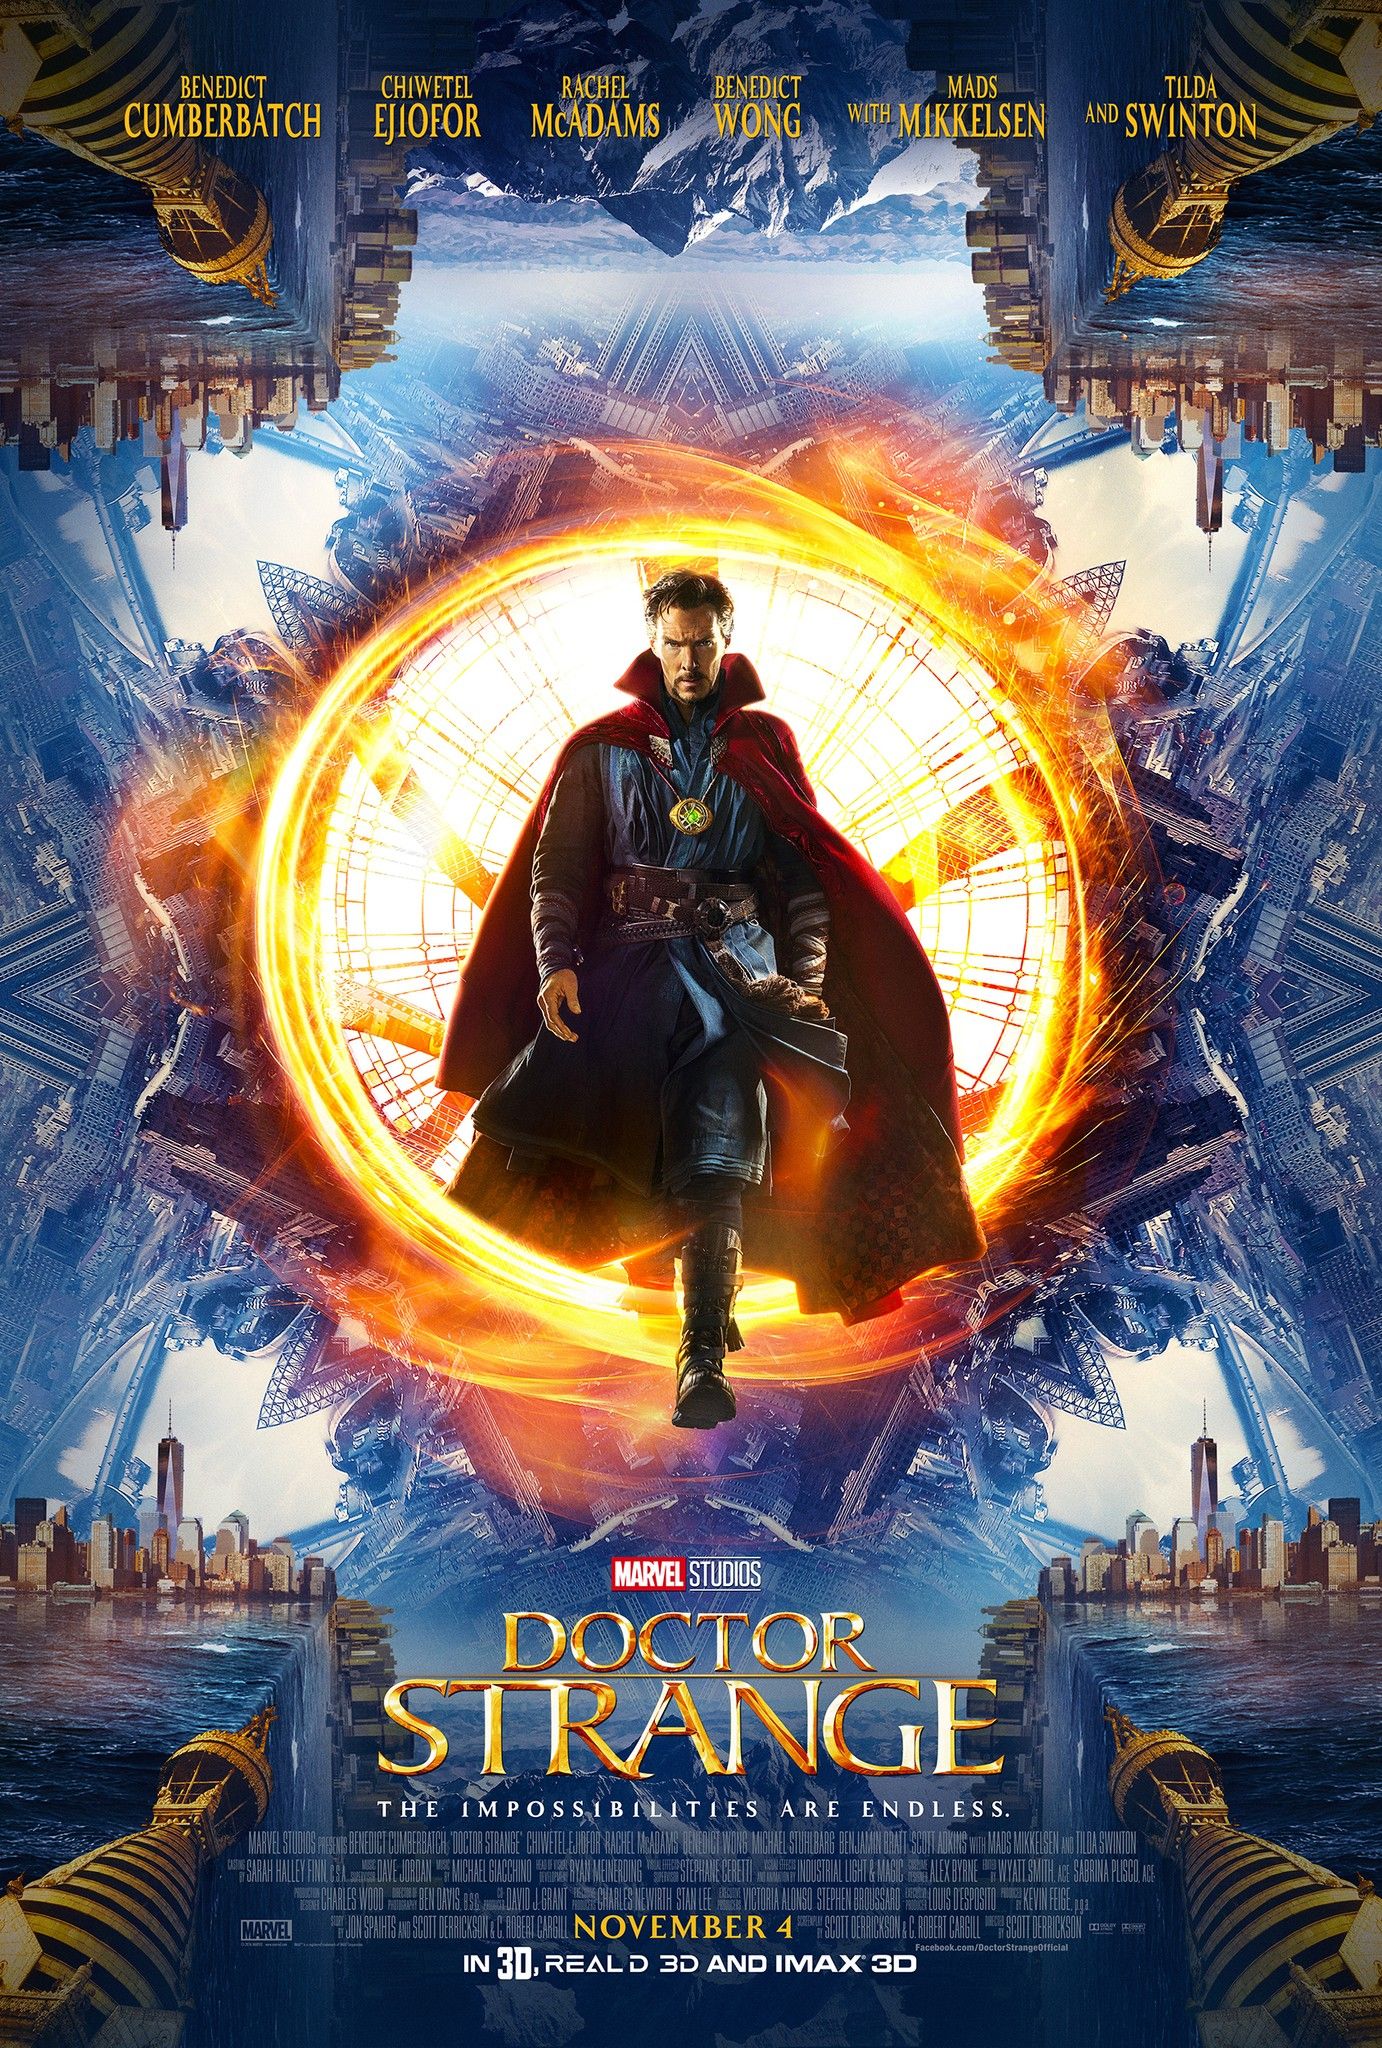 Doctor Strange (2016) Hindi Dubbed BluRay download full movie